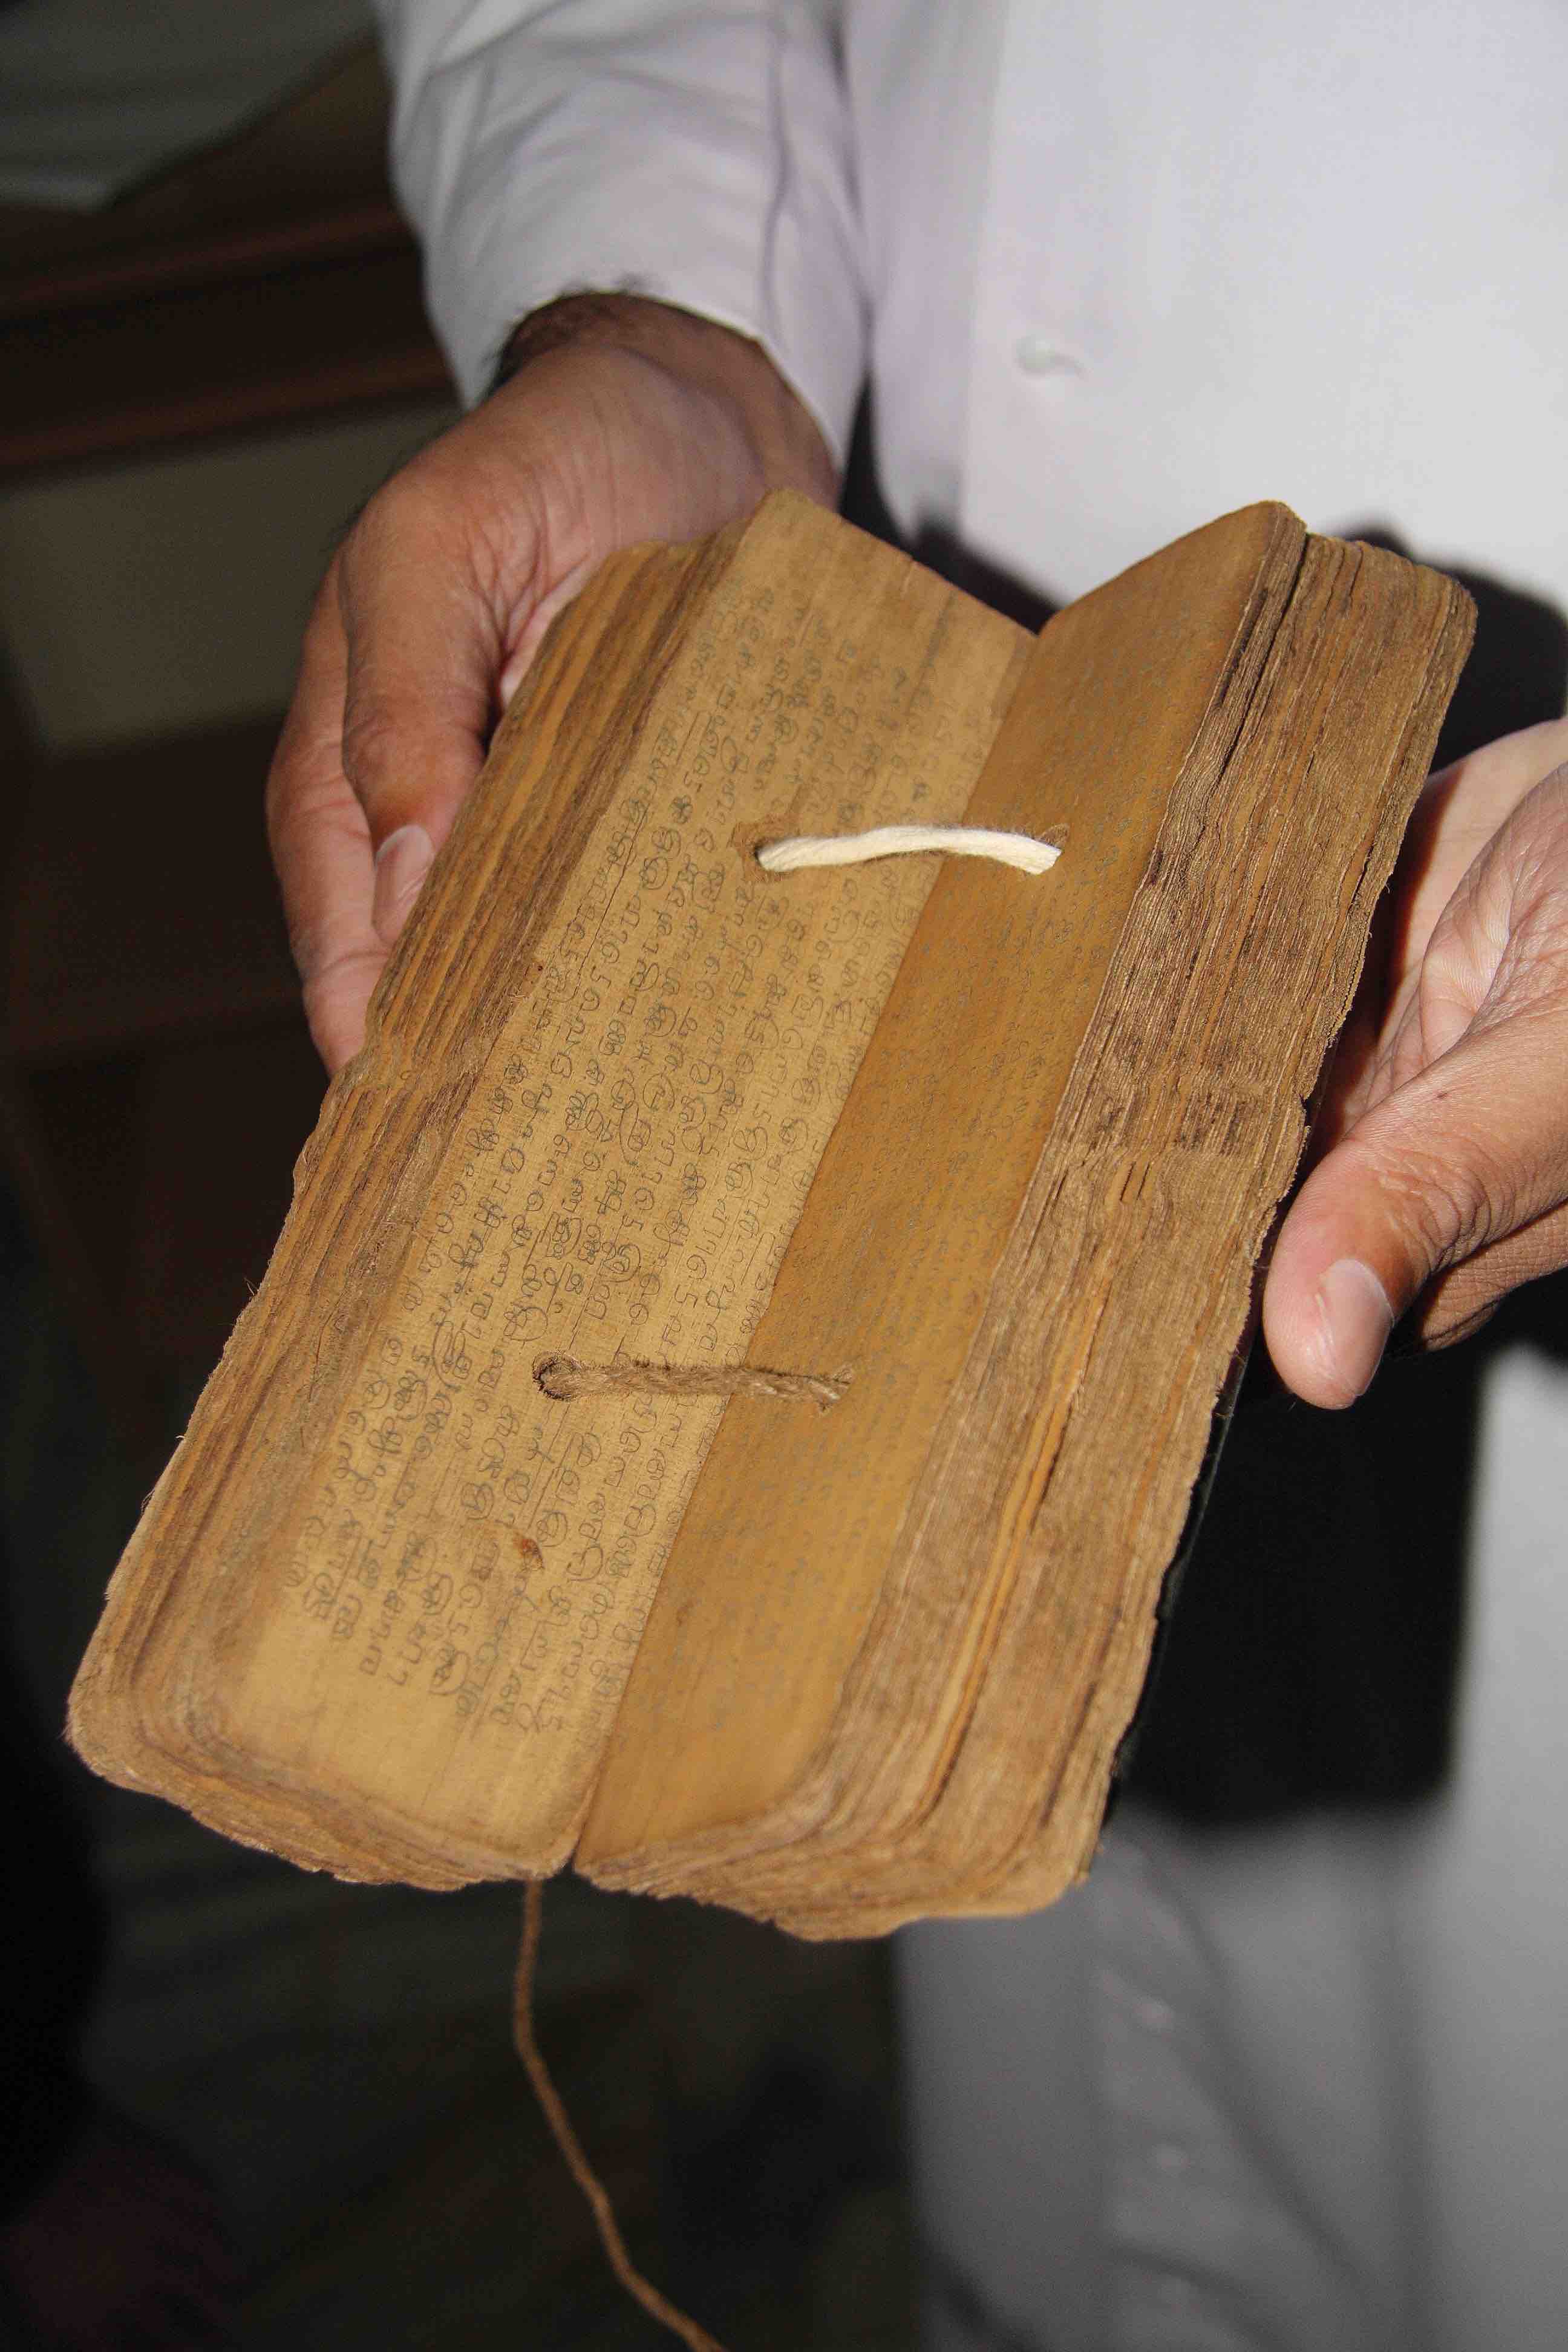 Palm-leaf manuscript